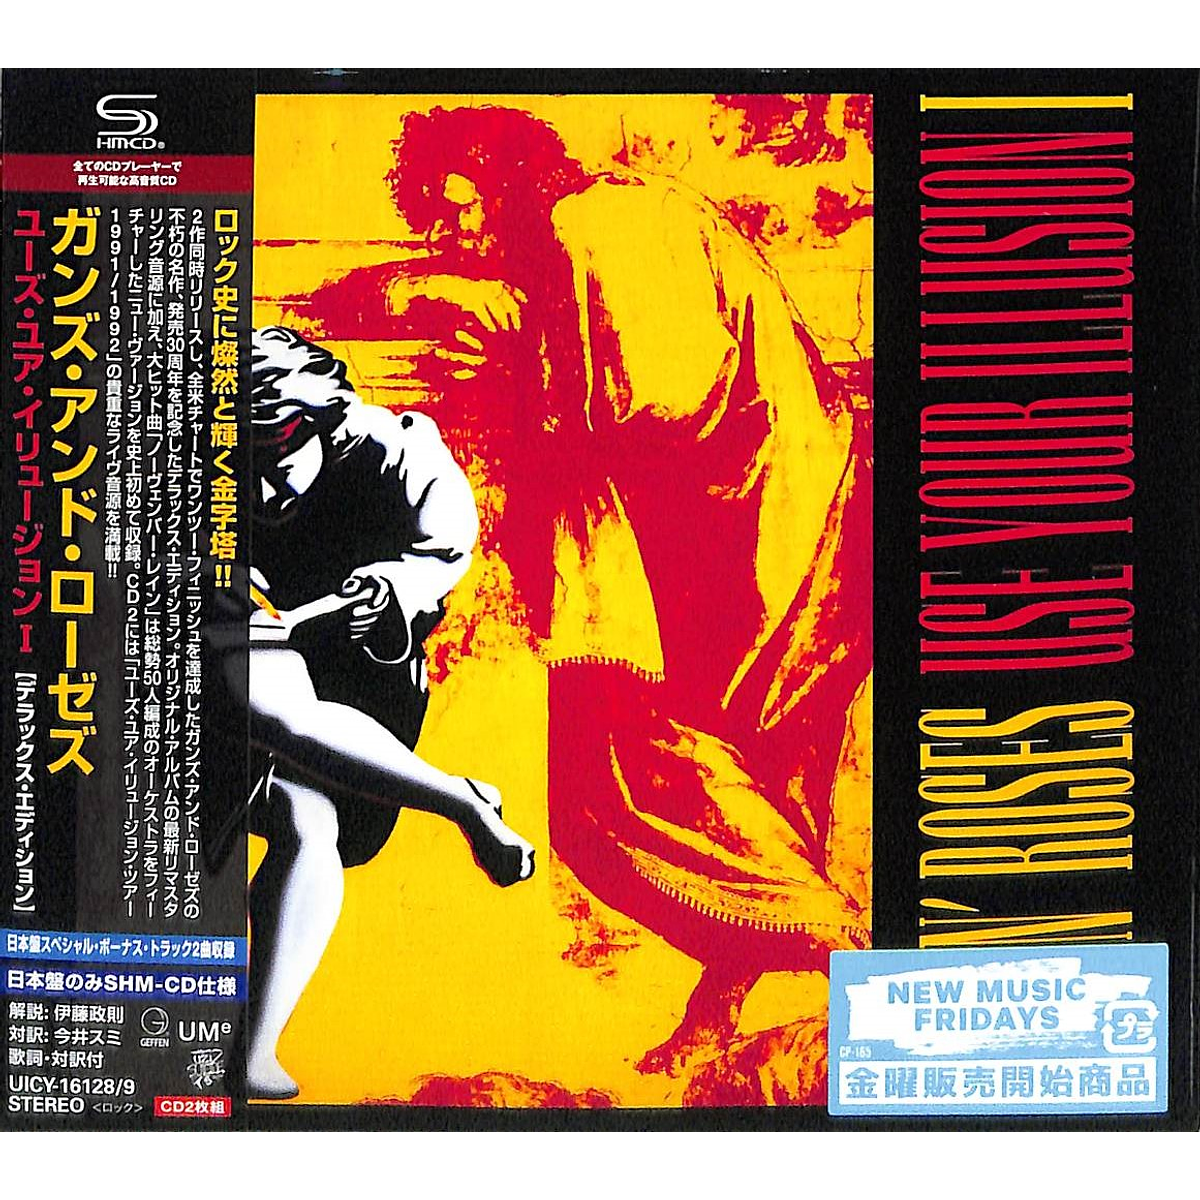 Guns N' Roses – Use Your Illusion I - Shm-Cd - 2 Cds - Japon